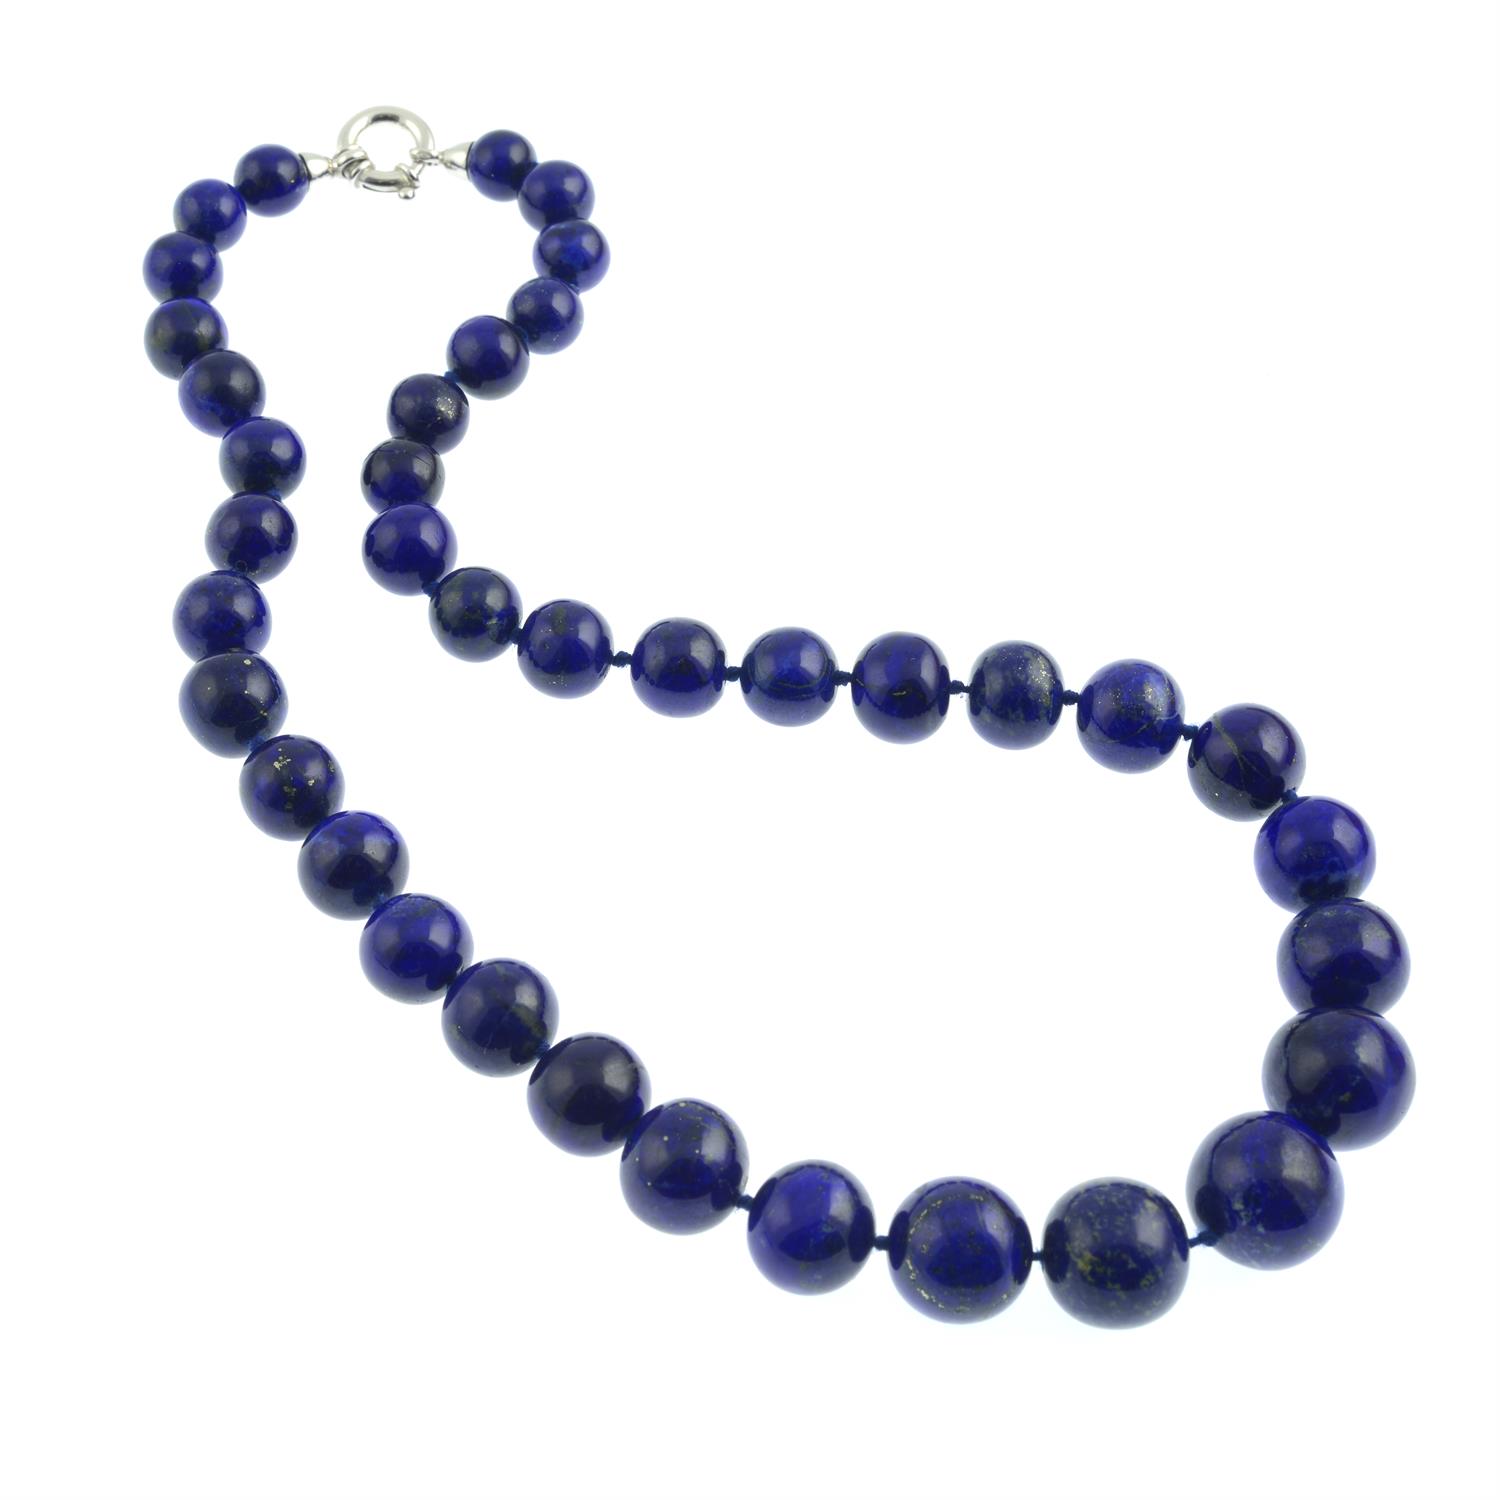 A graduated lapis lazuli bead necklace.